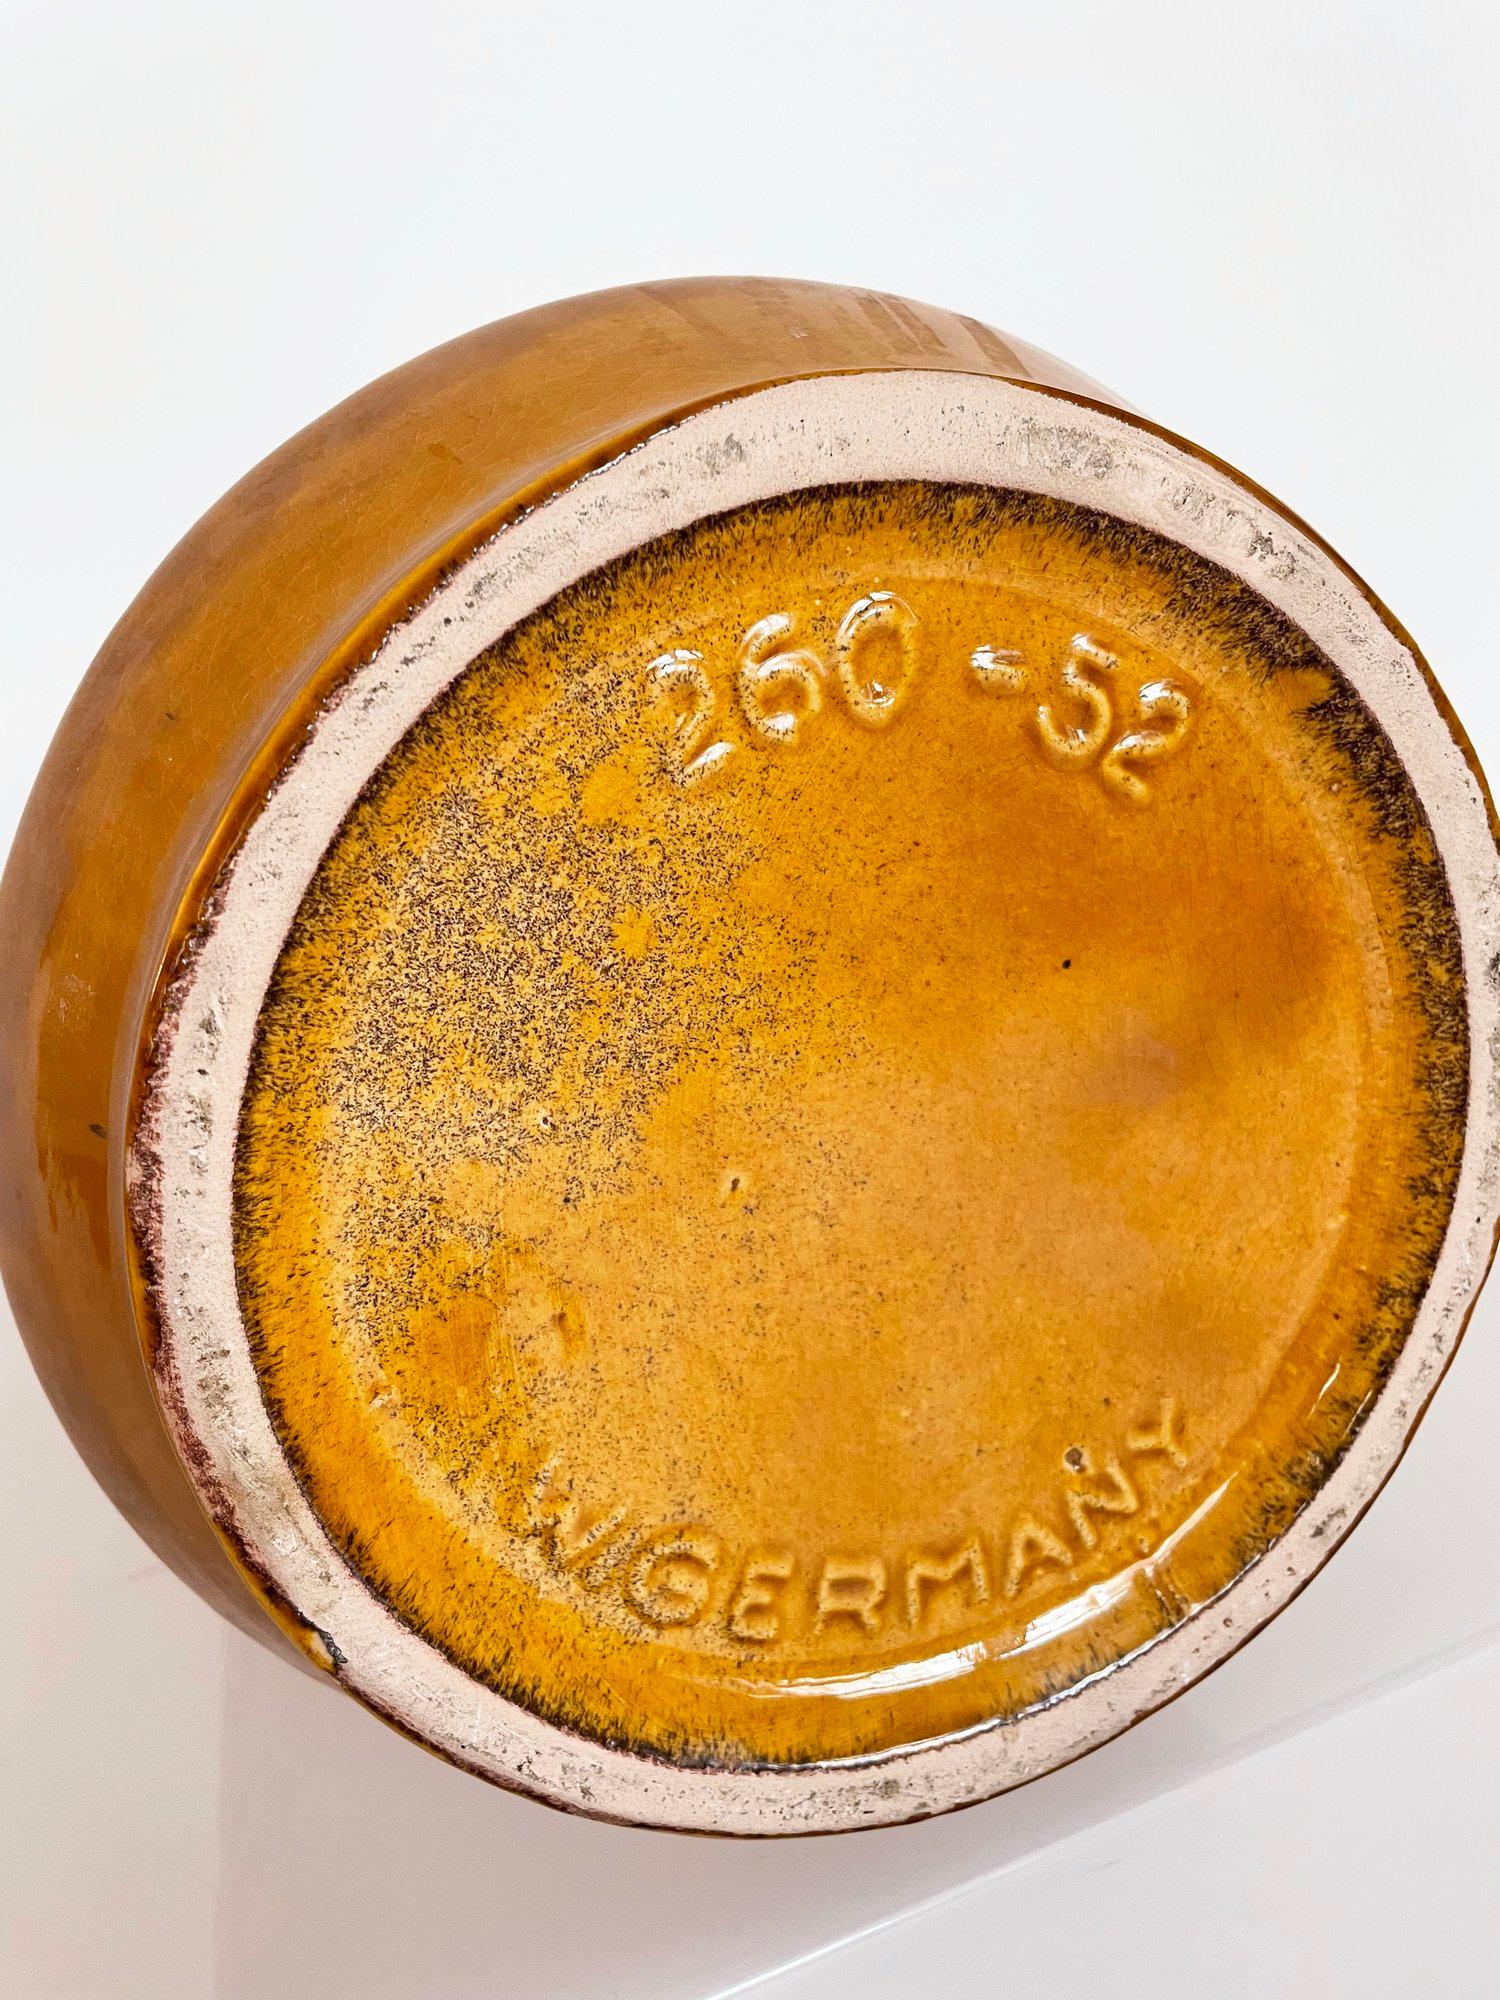 1960's Scheurich Keramik Westdeutsche Keramik 'Inka' Vase. Am Sockel nummeriert: W. Germany 260-52. Muster 'Inka' mit ockerfarbener Glasur.
